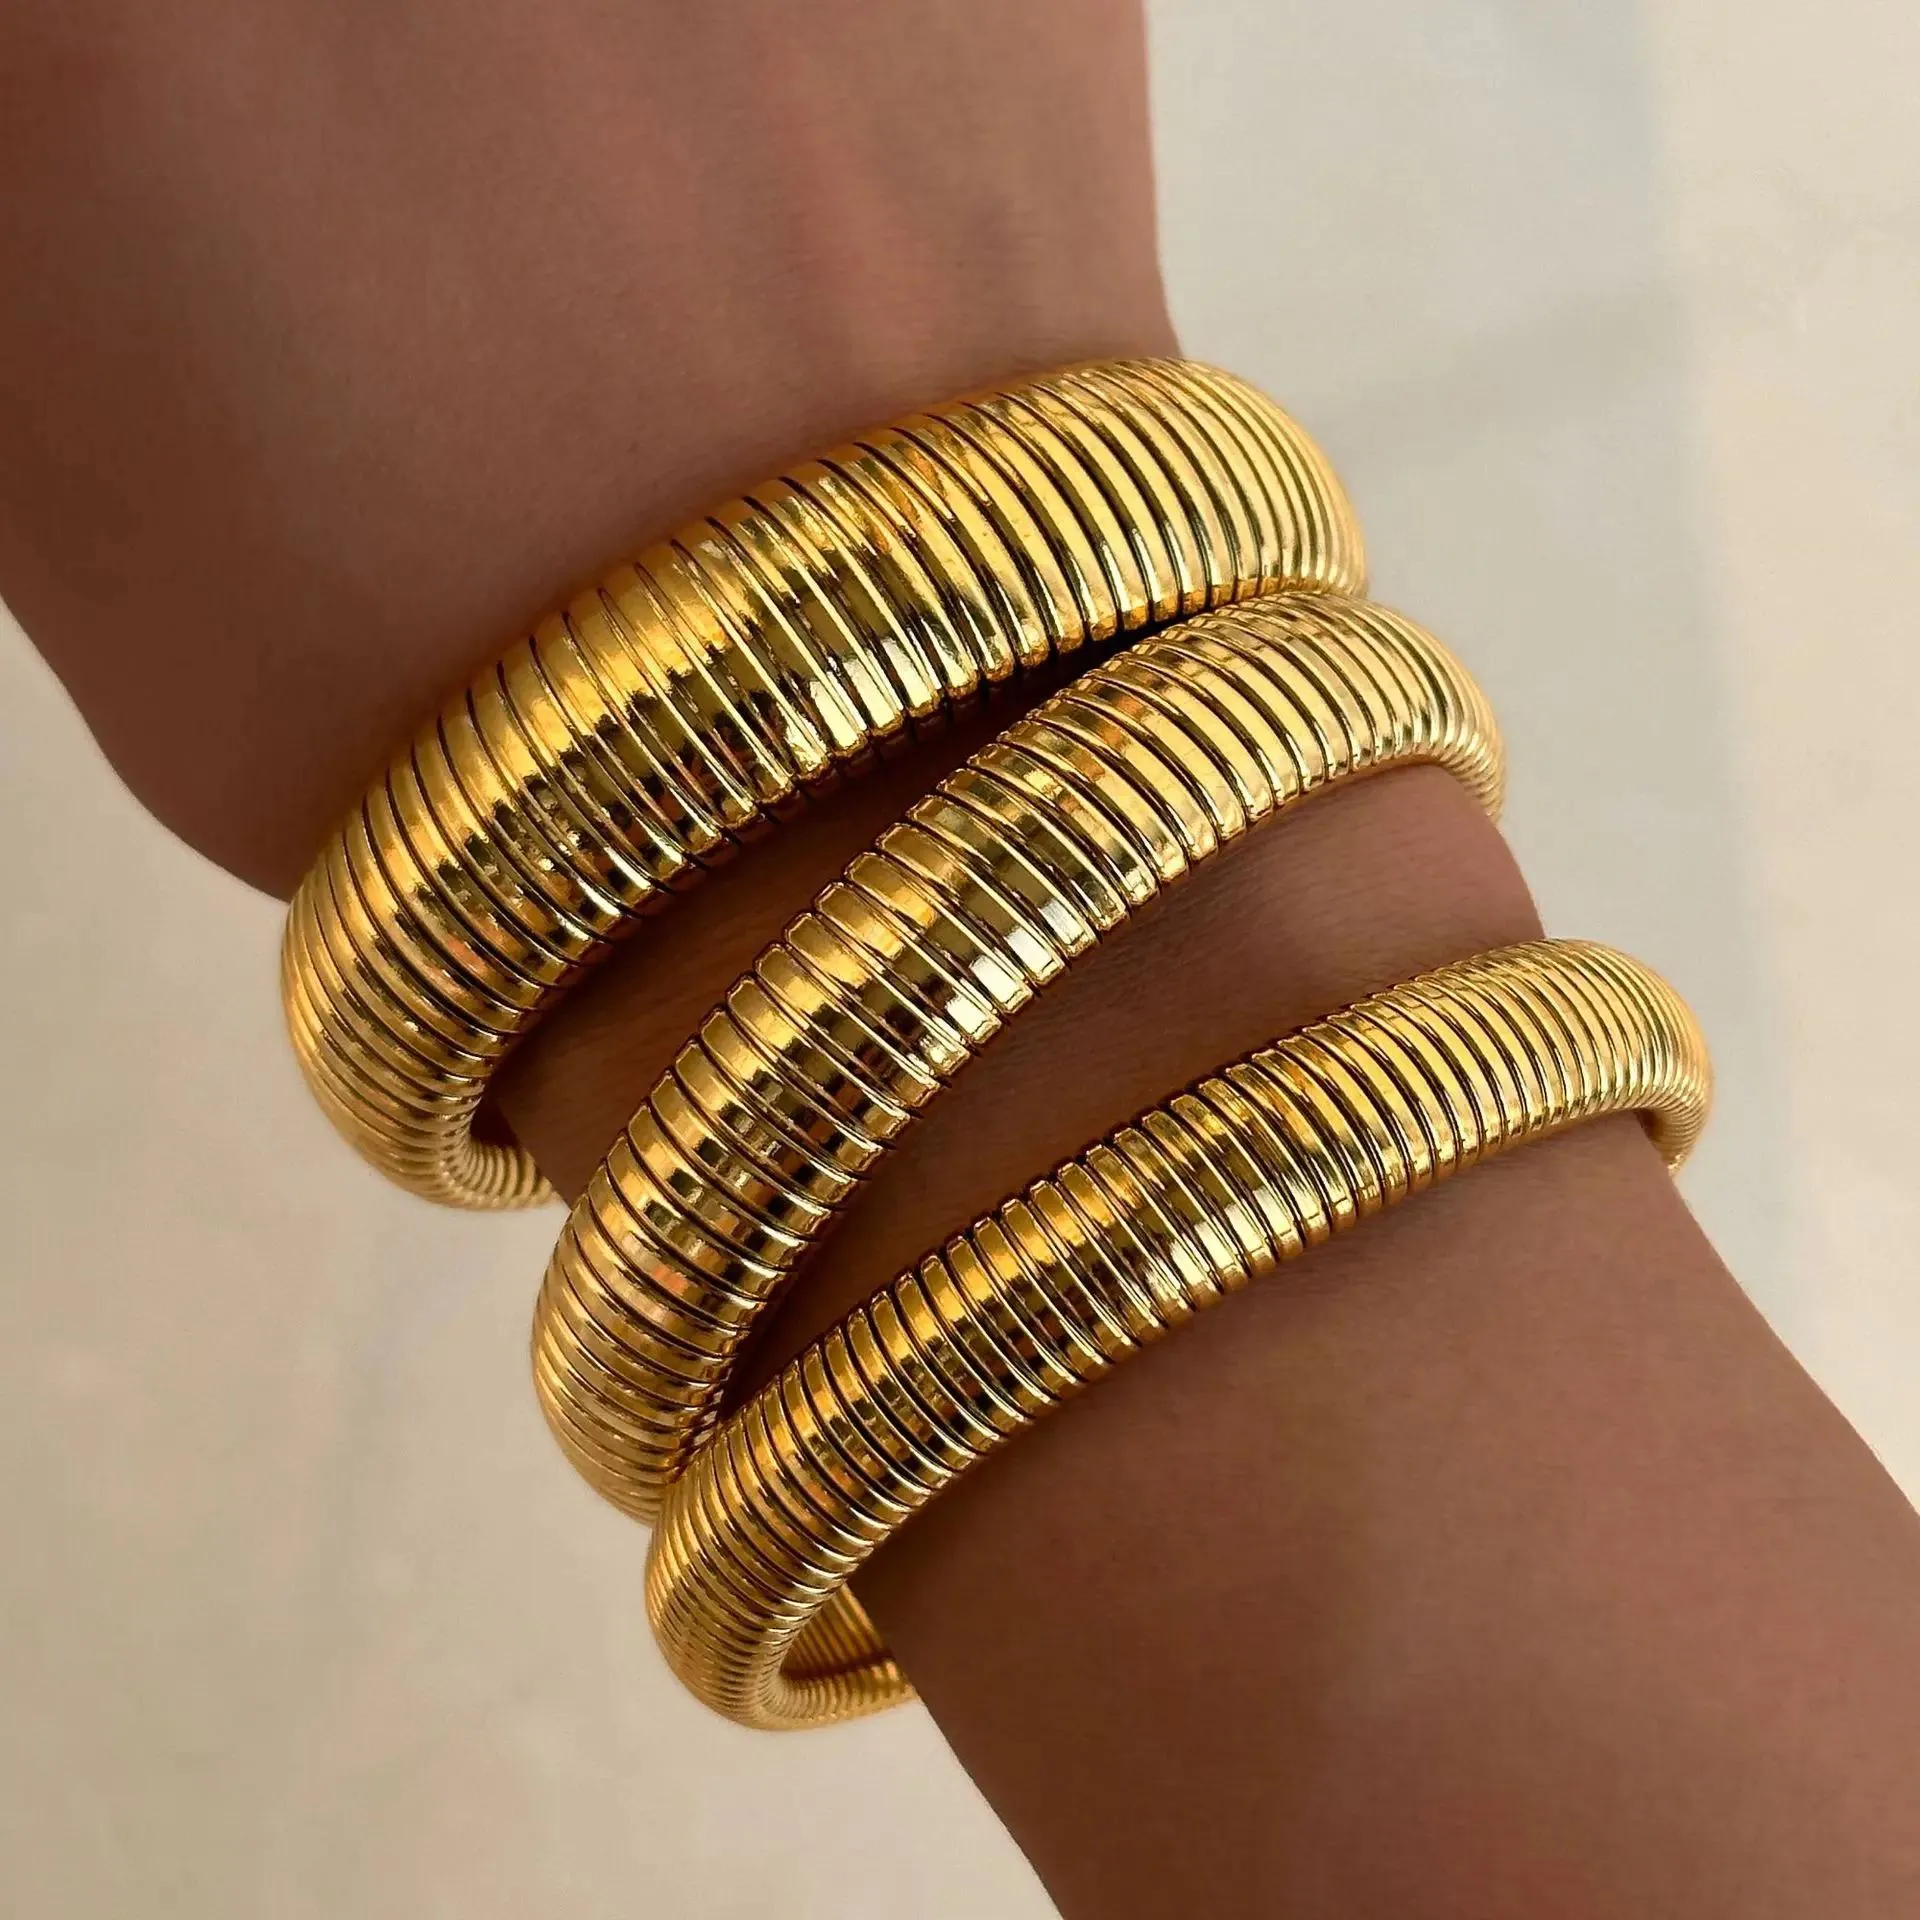 Ringe Gold plattiert Titanstahl Armband Vintage Elastic Gypsy Polishing Armreifen für Frauen Mädchen Mode -Ästhetikschmuck